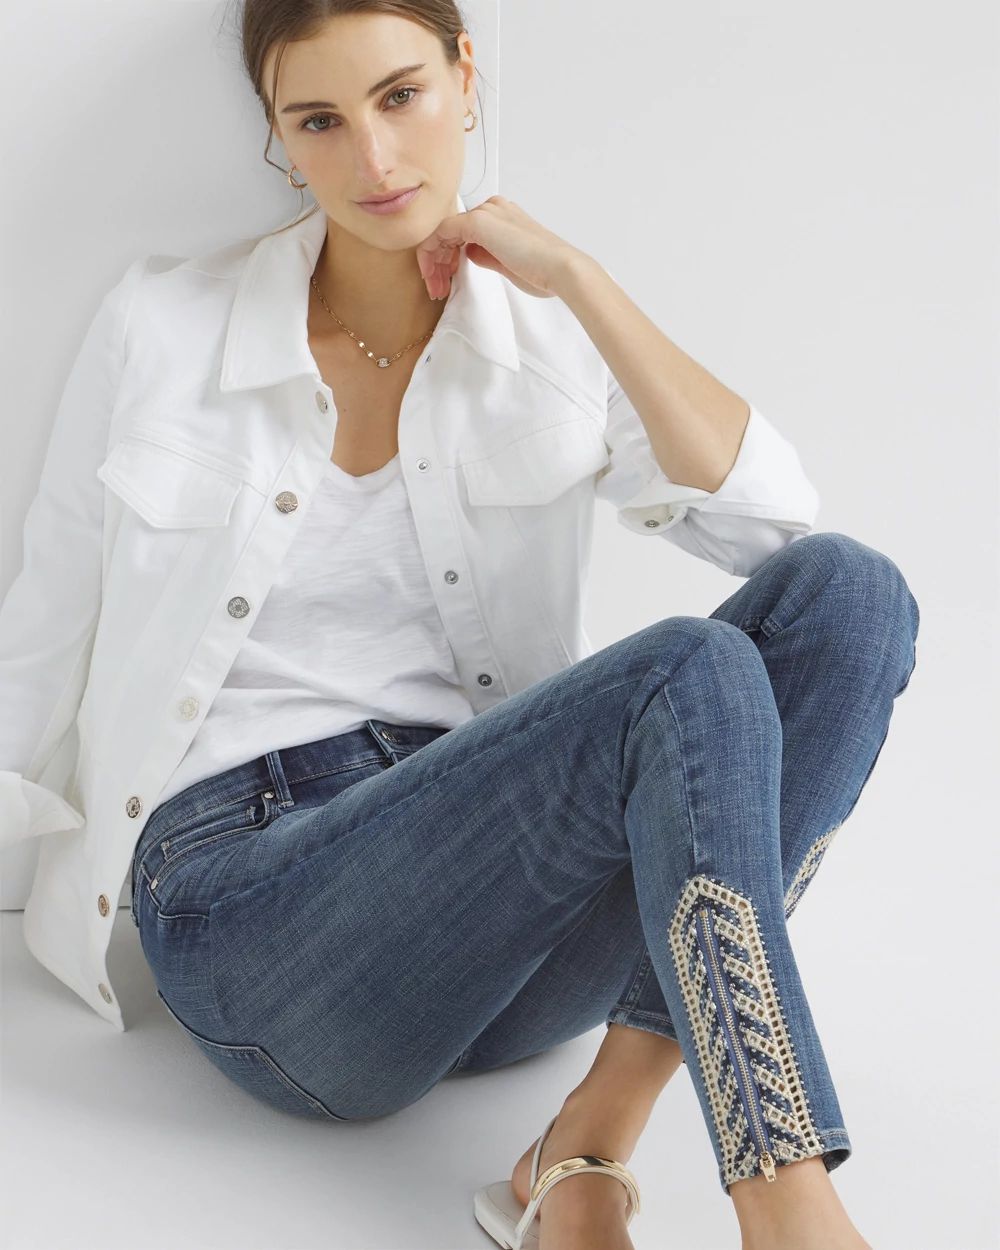 High-Rise Everyday Soft Denim Embellished Hem Skinny Ankle Jeans click to view larger image.